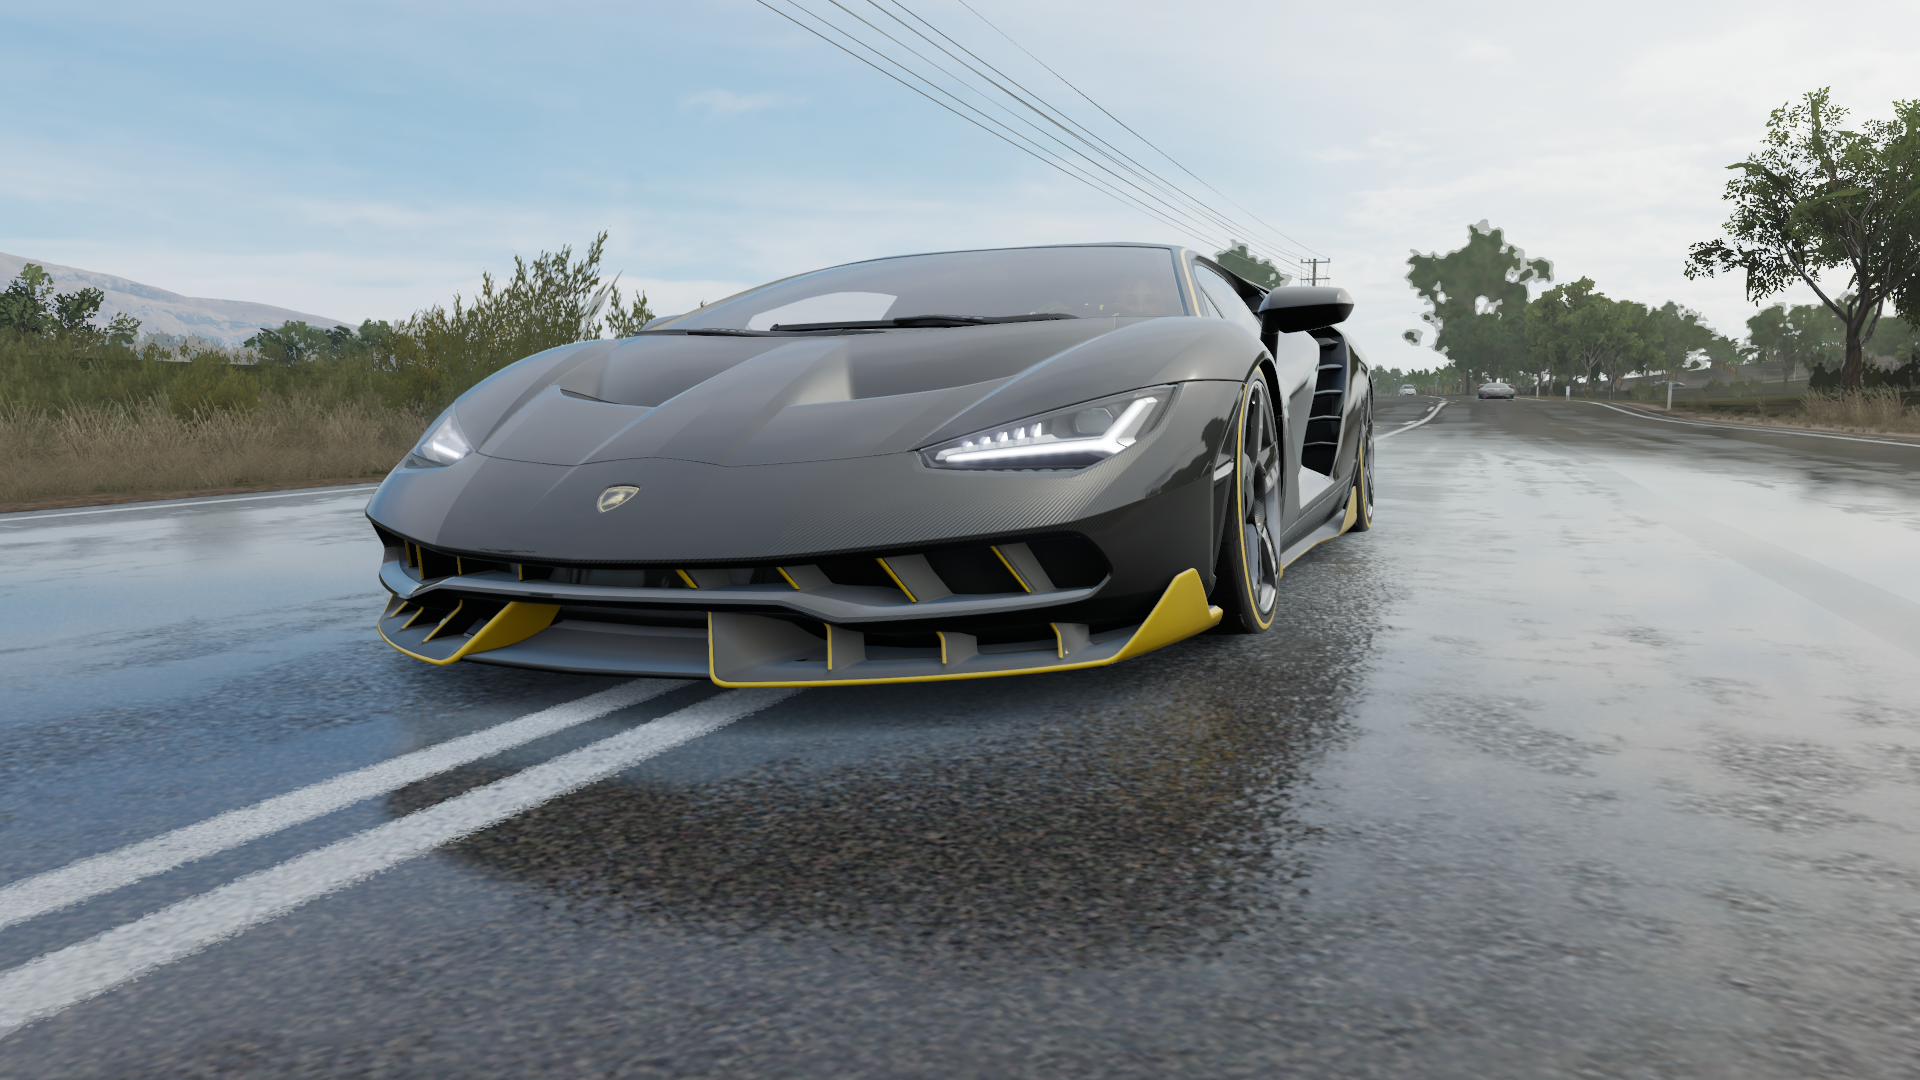 General 1920x1080 Forza Horizon 3 car video games Lamborghini Centenario Lamborghini black cars screen shot vehicle asphalt wet